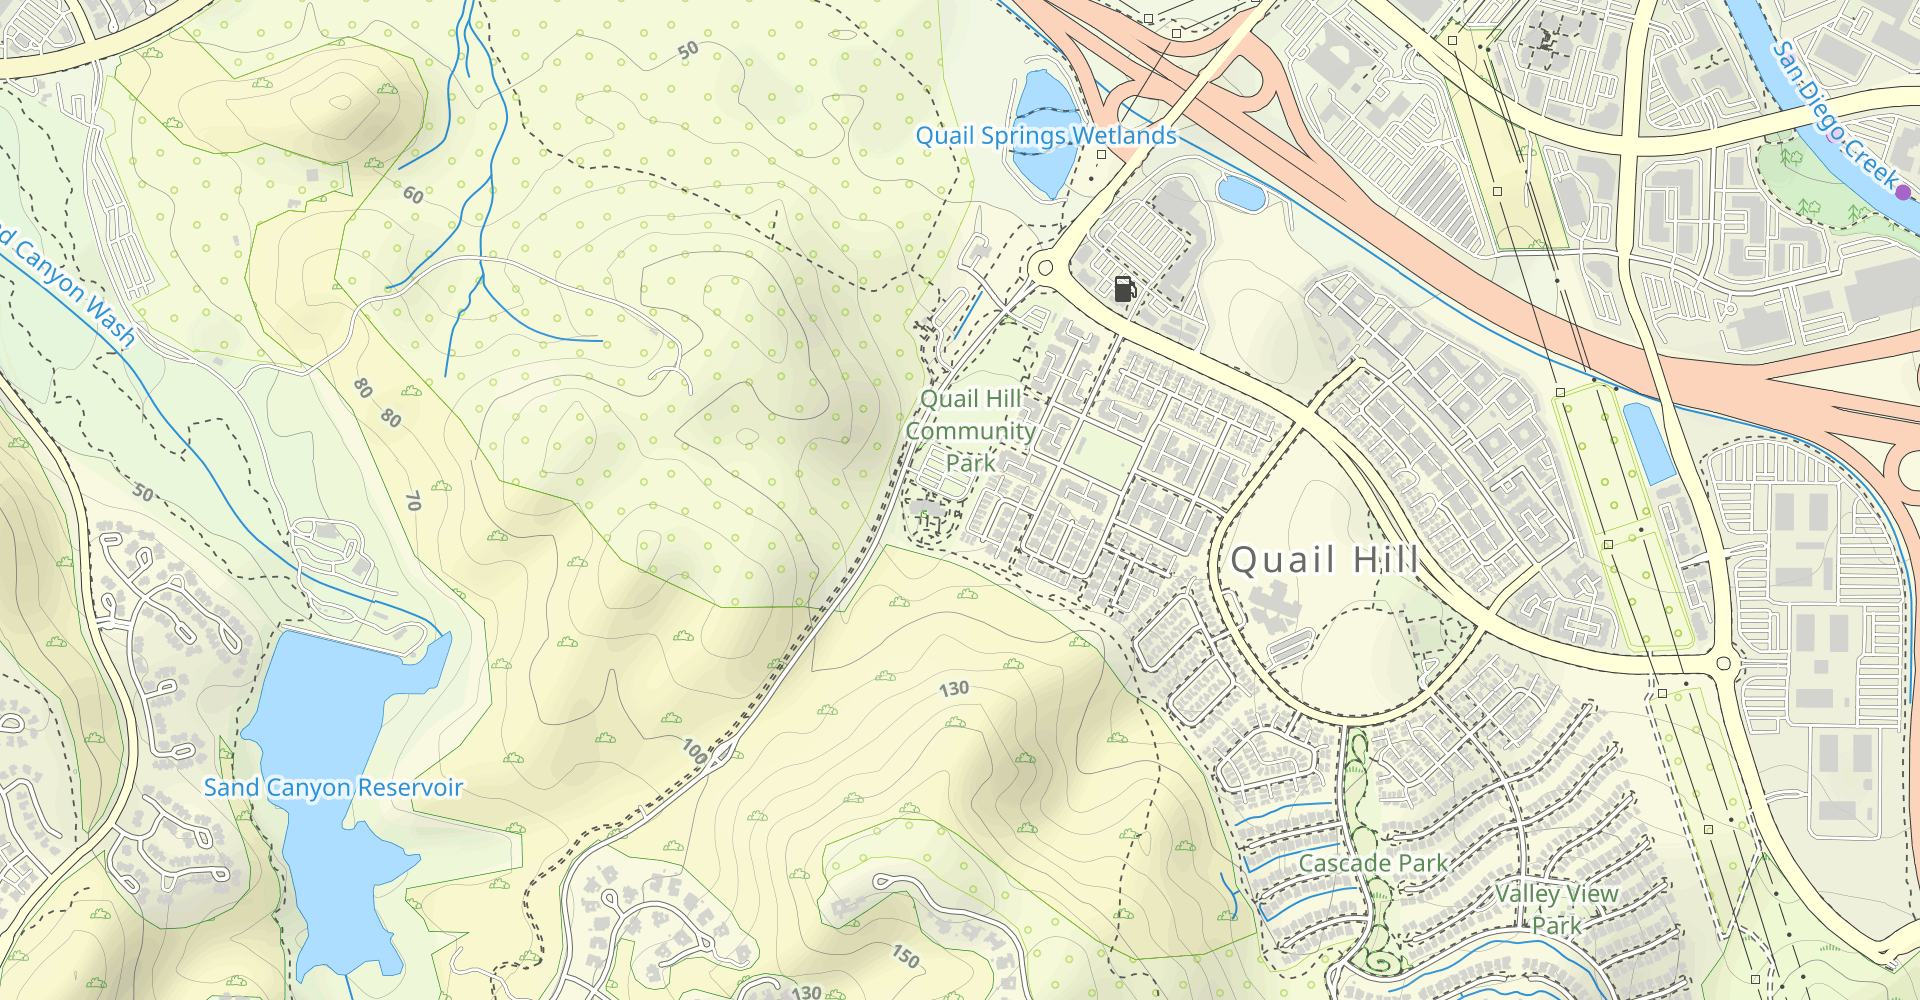 Shady Canyon Loop via Quail Hill Community Park